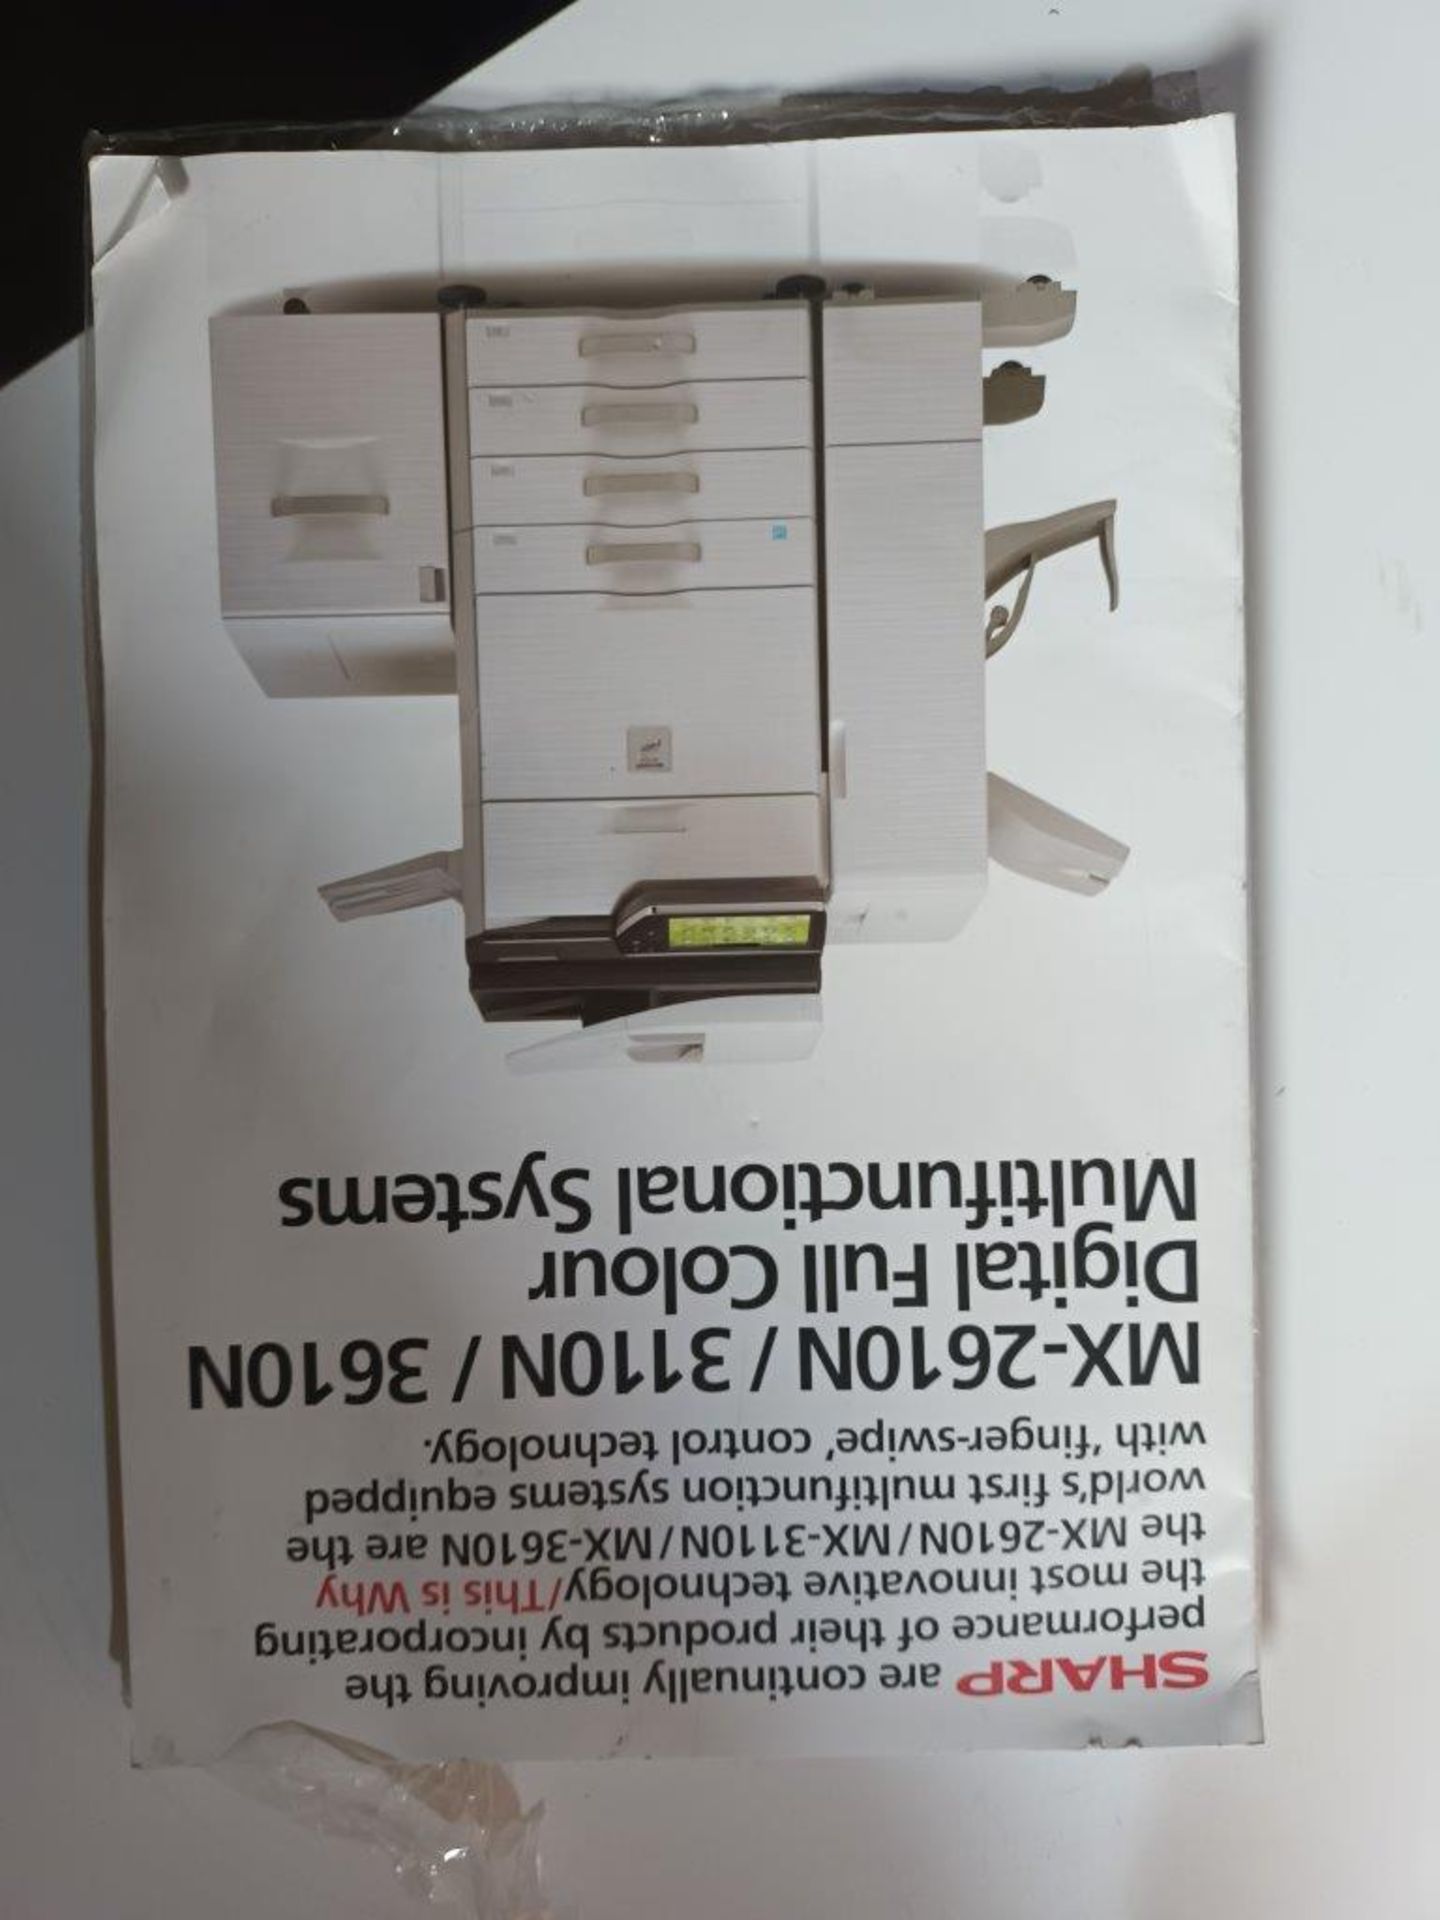 Sharp MX2640 copier - Image 3 of 4